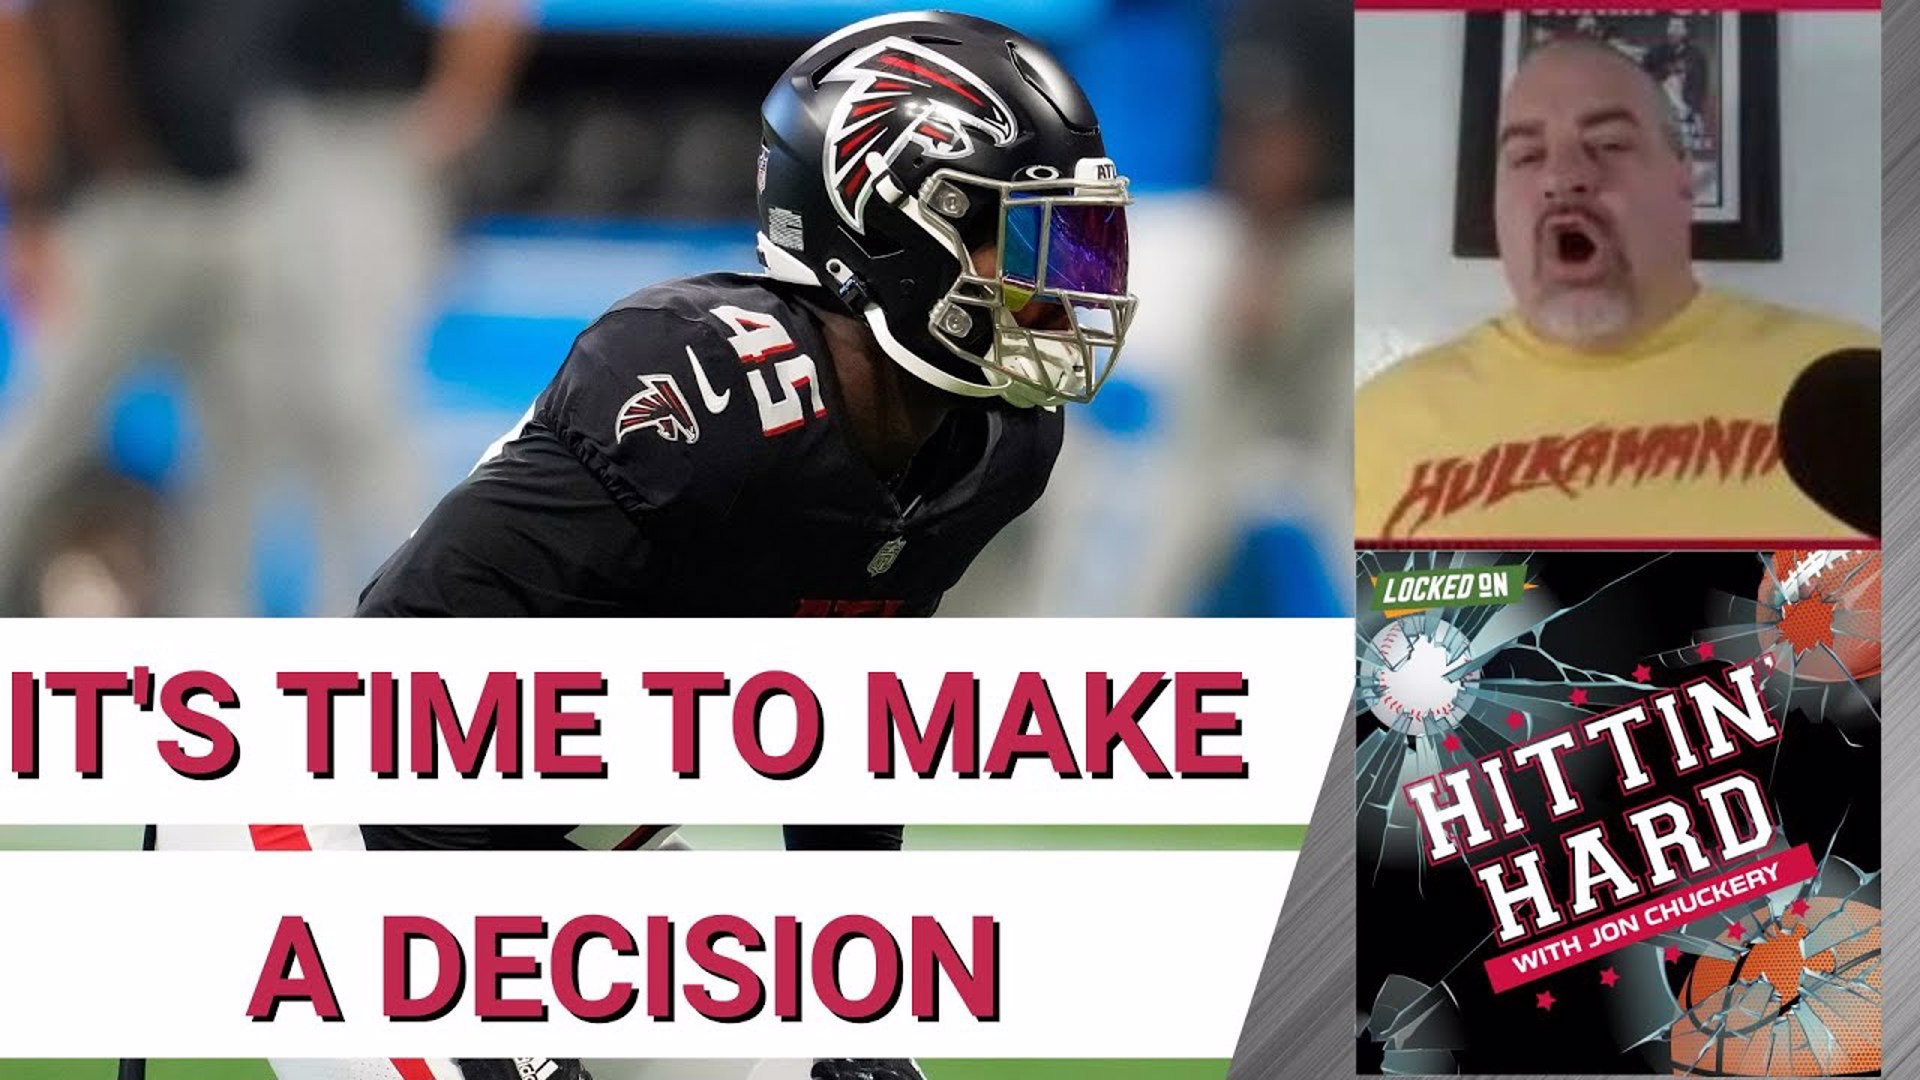 The Atlanta Falcons Will Have To Make Some Decisions Soon|Hittin Hard With Jon Chuckery